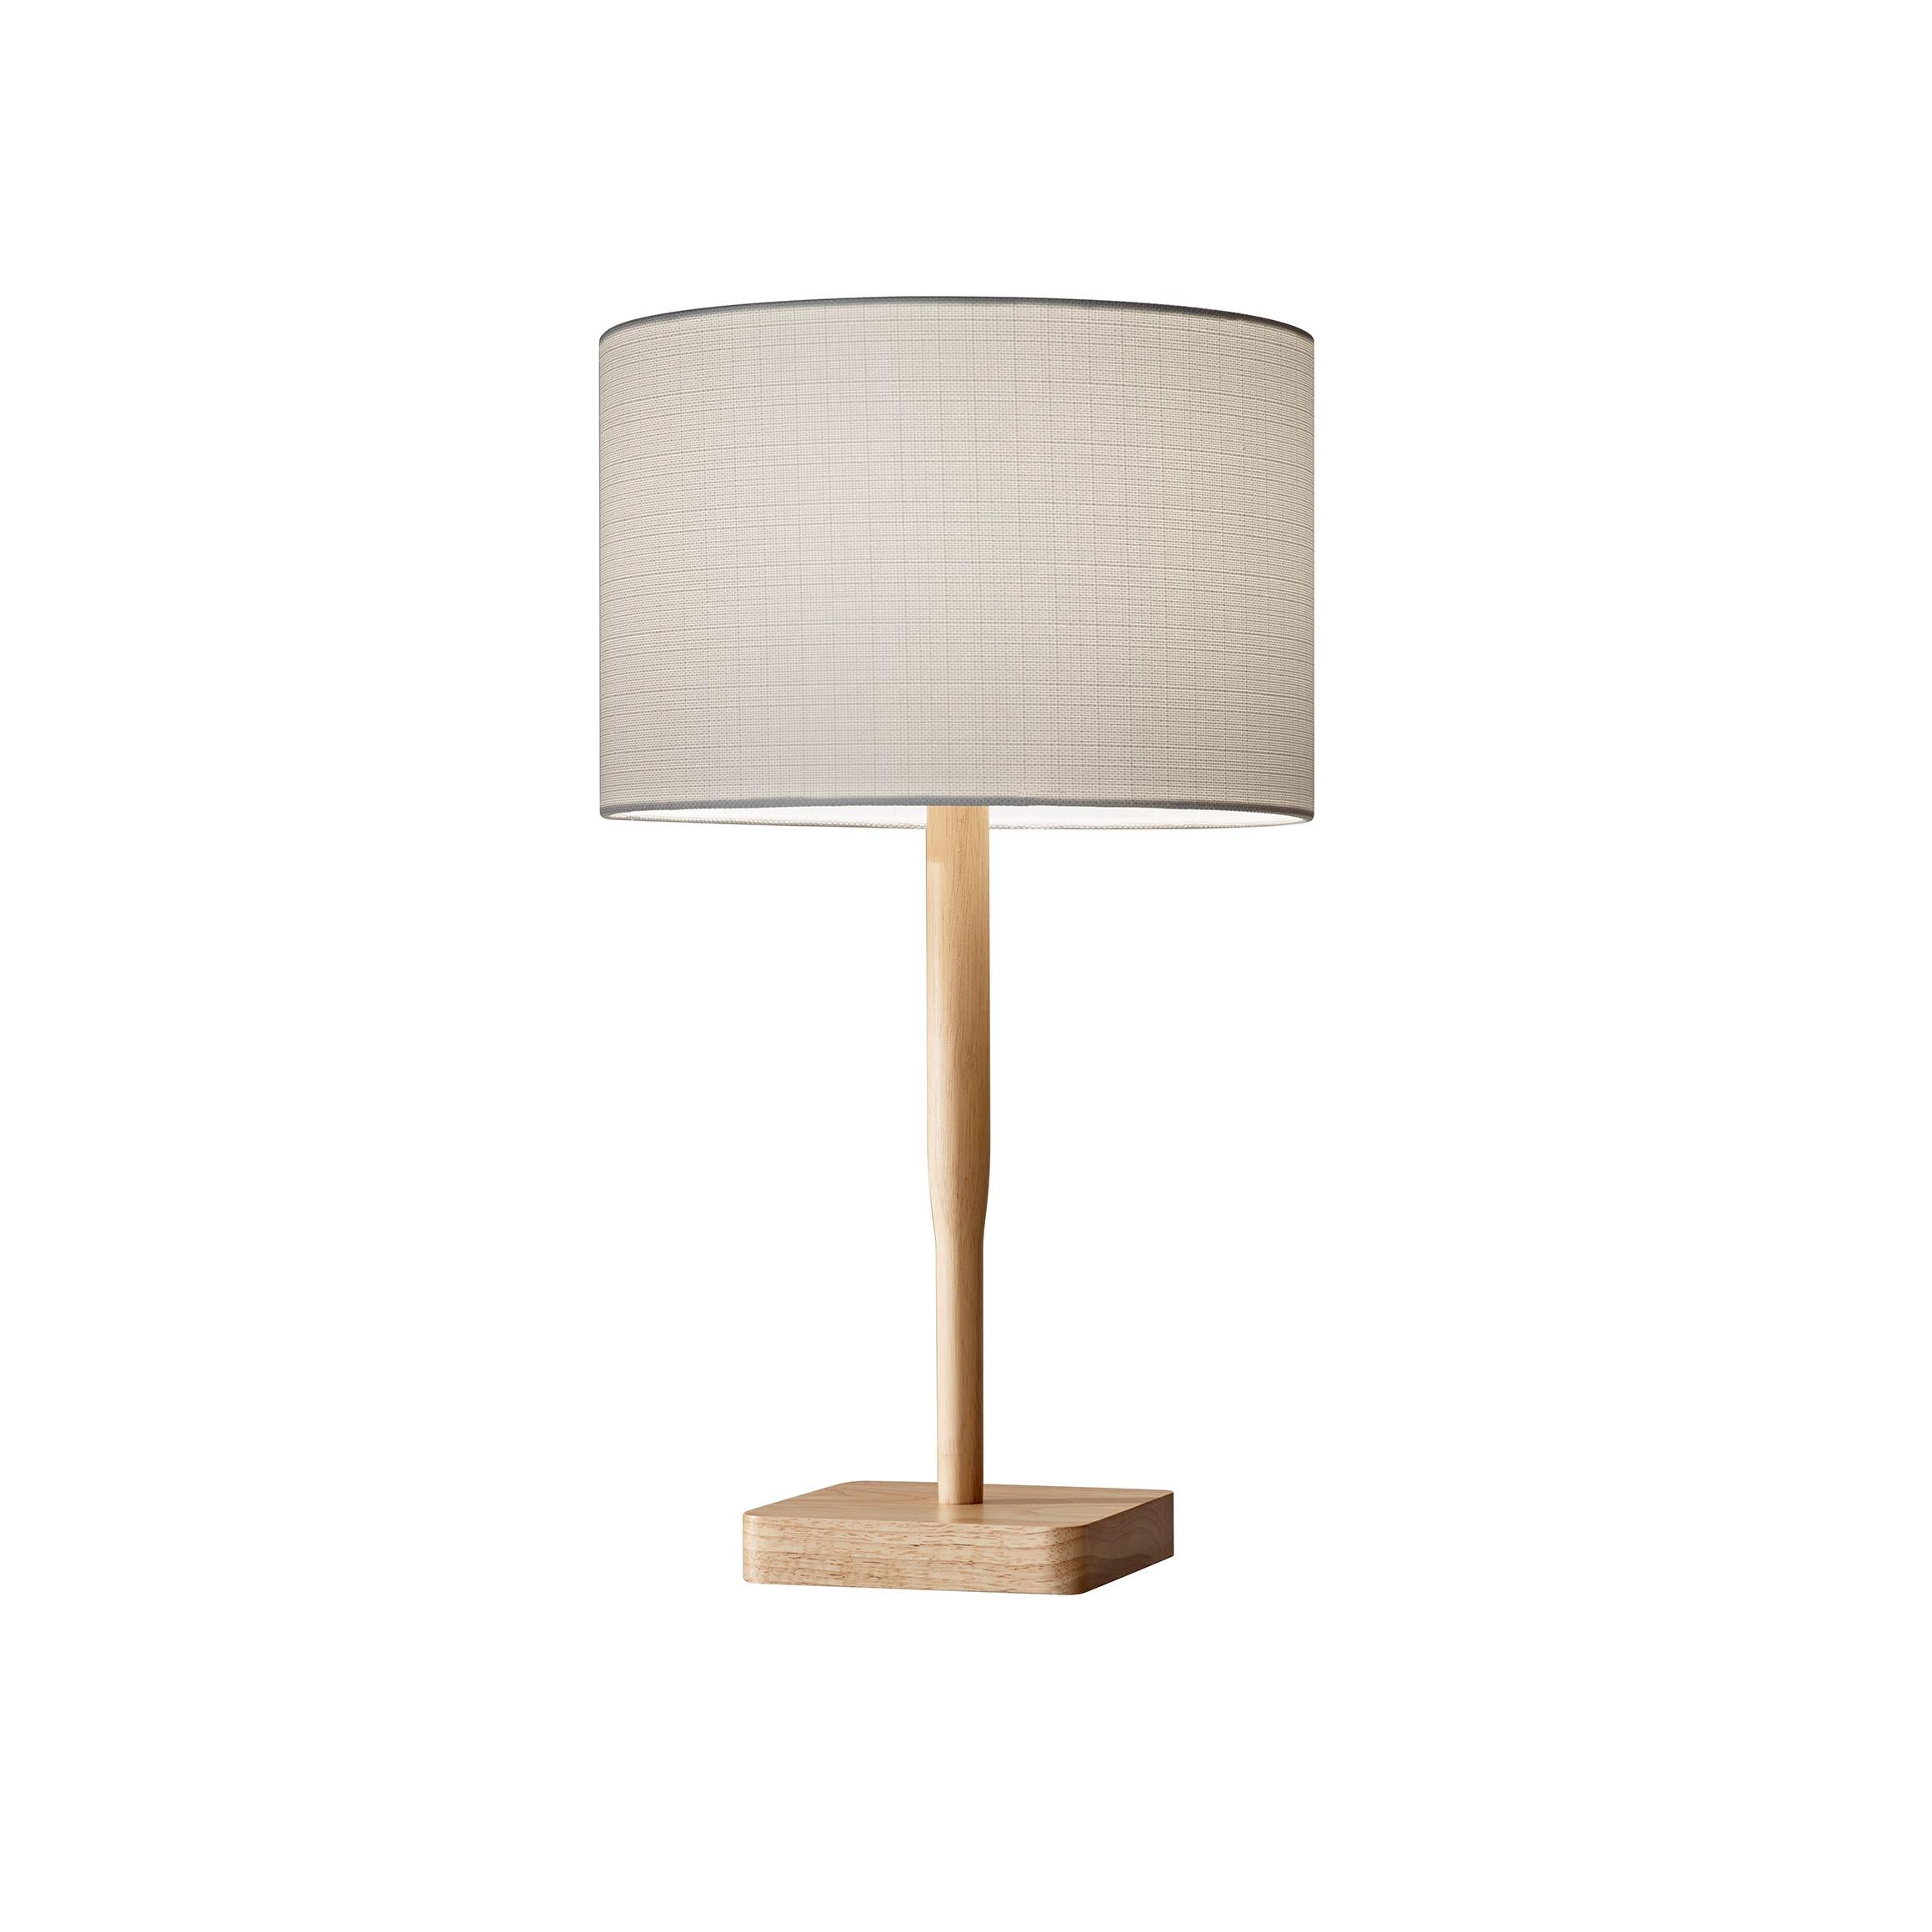 Adesso Ellis Table Lamp - Natural